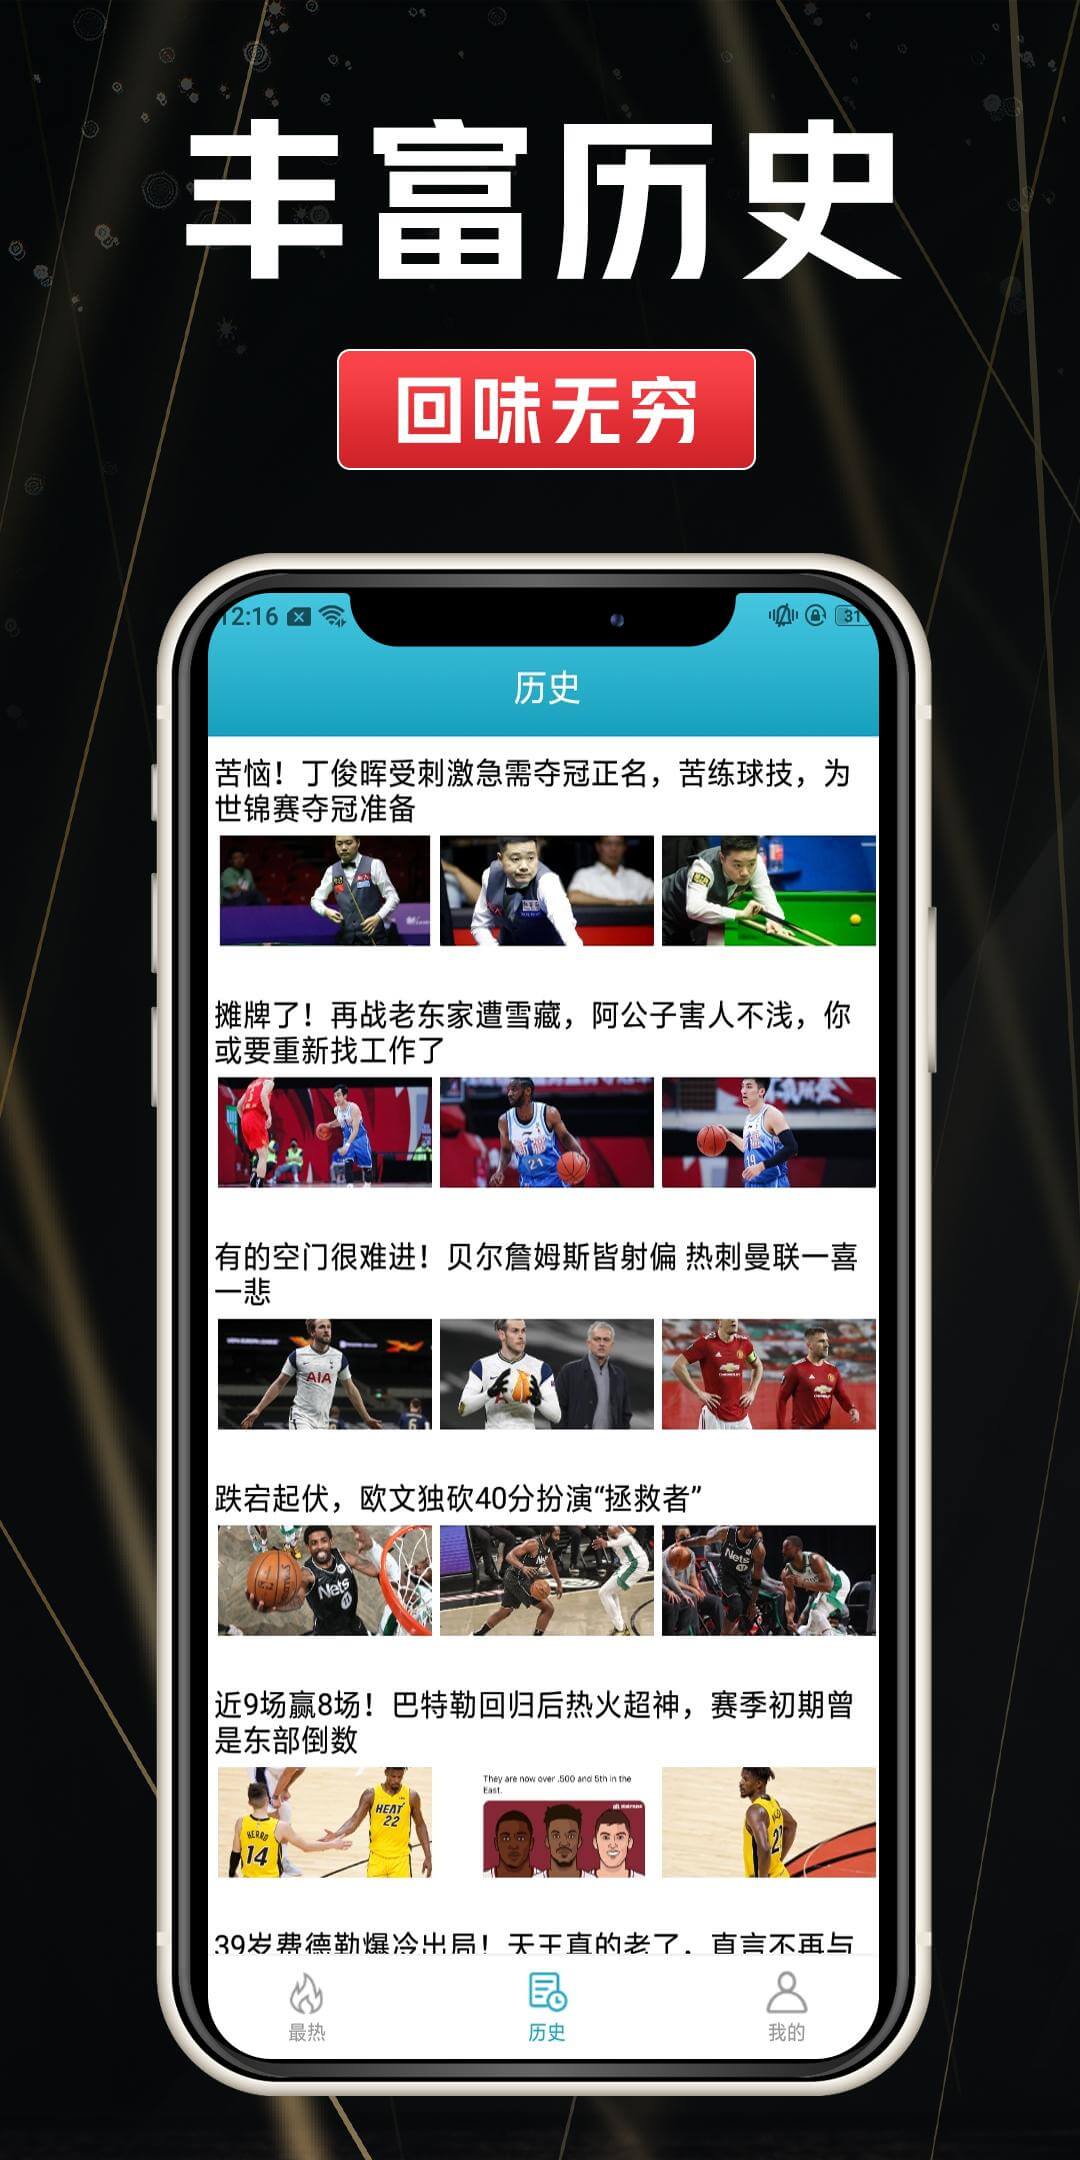 tvt体育直播app下载_tvt体育直播app最新版免费下载